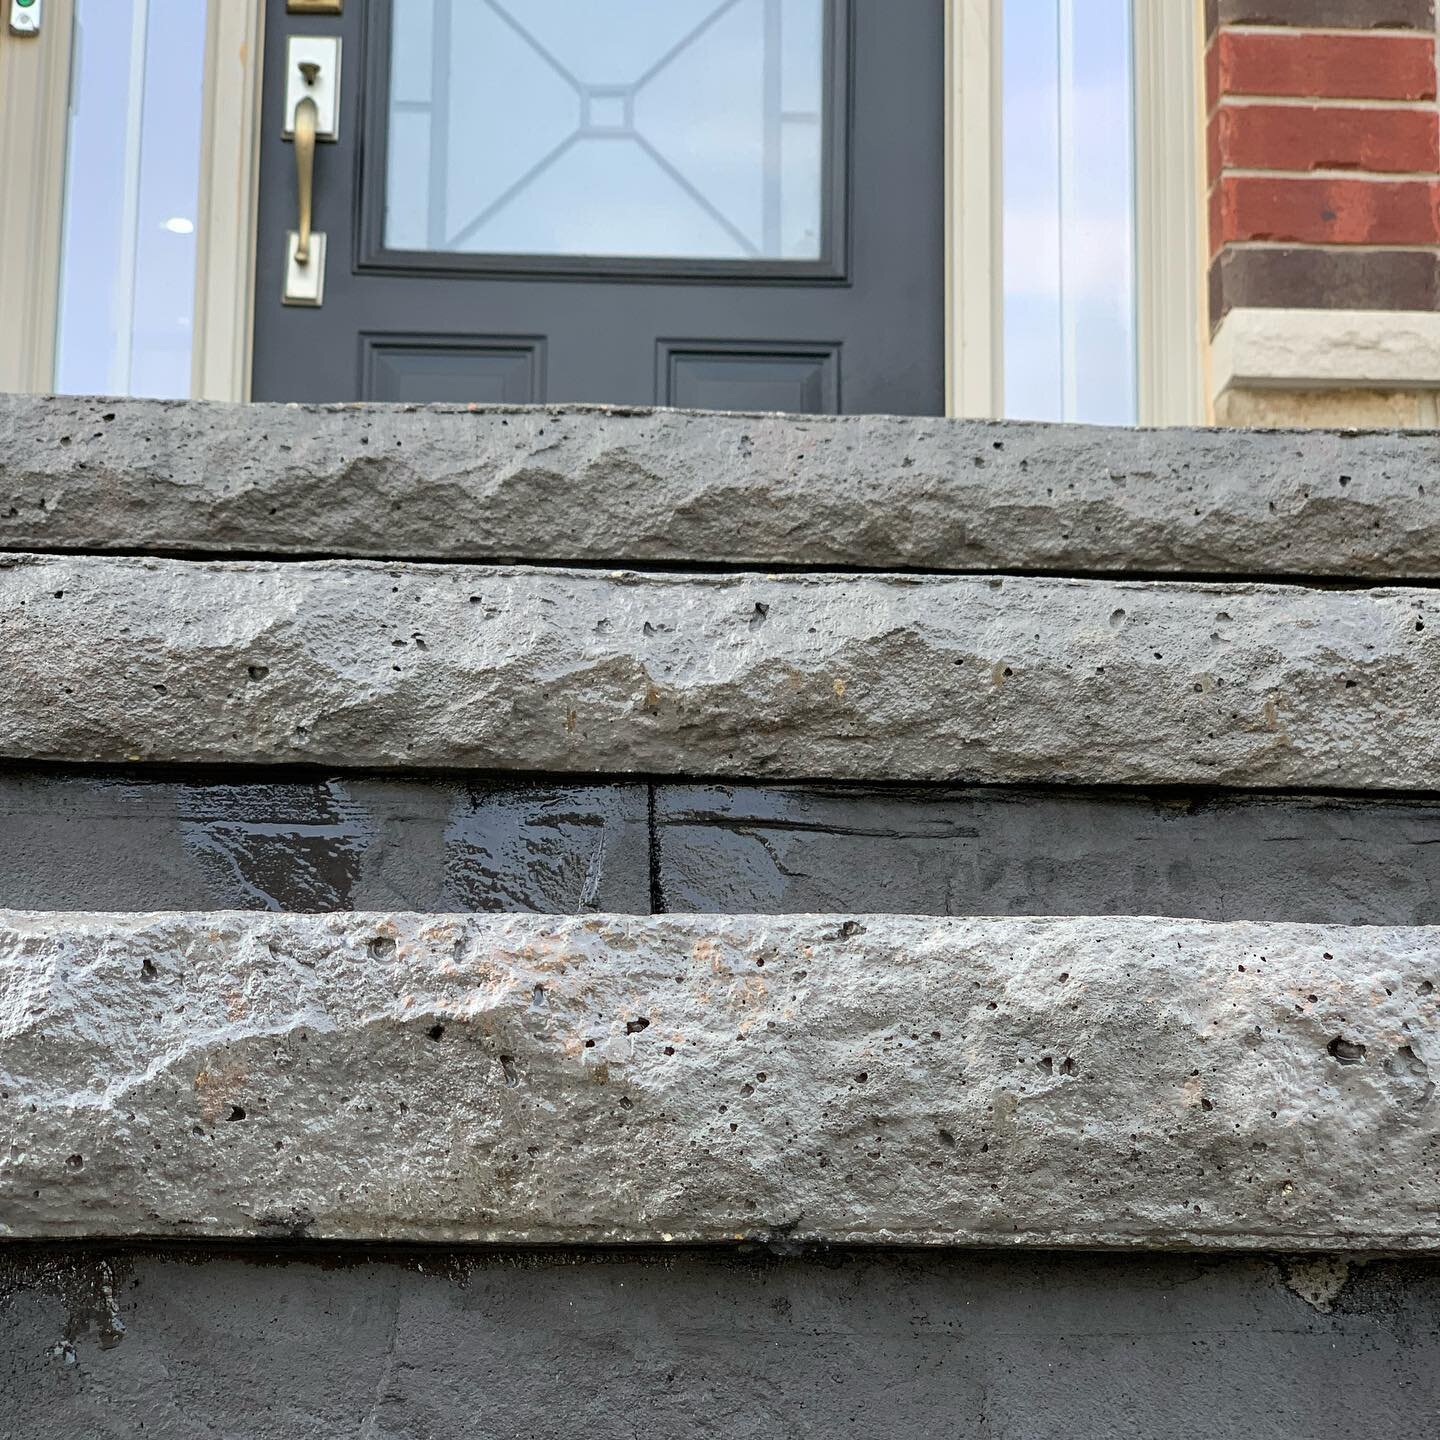 Bullnose Steps&hellip;Elegant and welcoming. 

#concretedesign #concretesteps #concreteconstruction #homerenovation #homeimprovement #hamont #brantford #homeiswheretheheartis #burlington #niagara